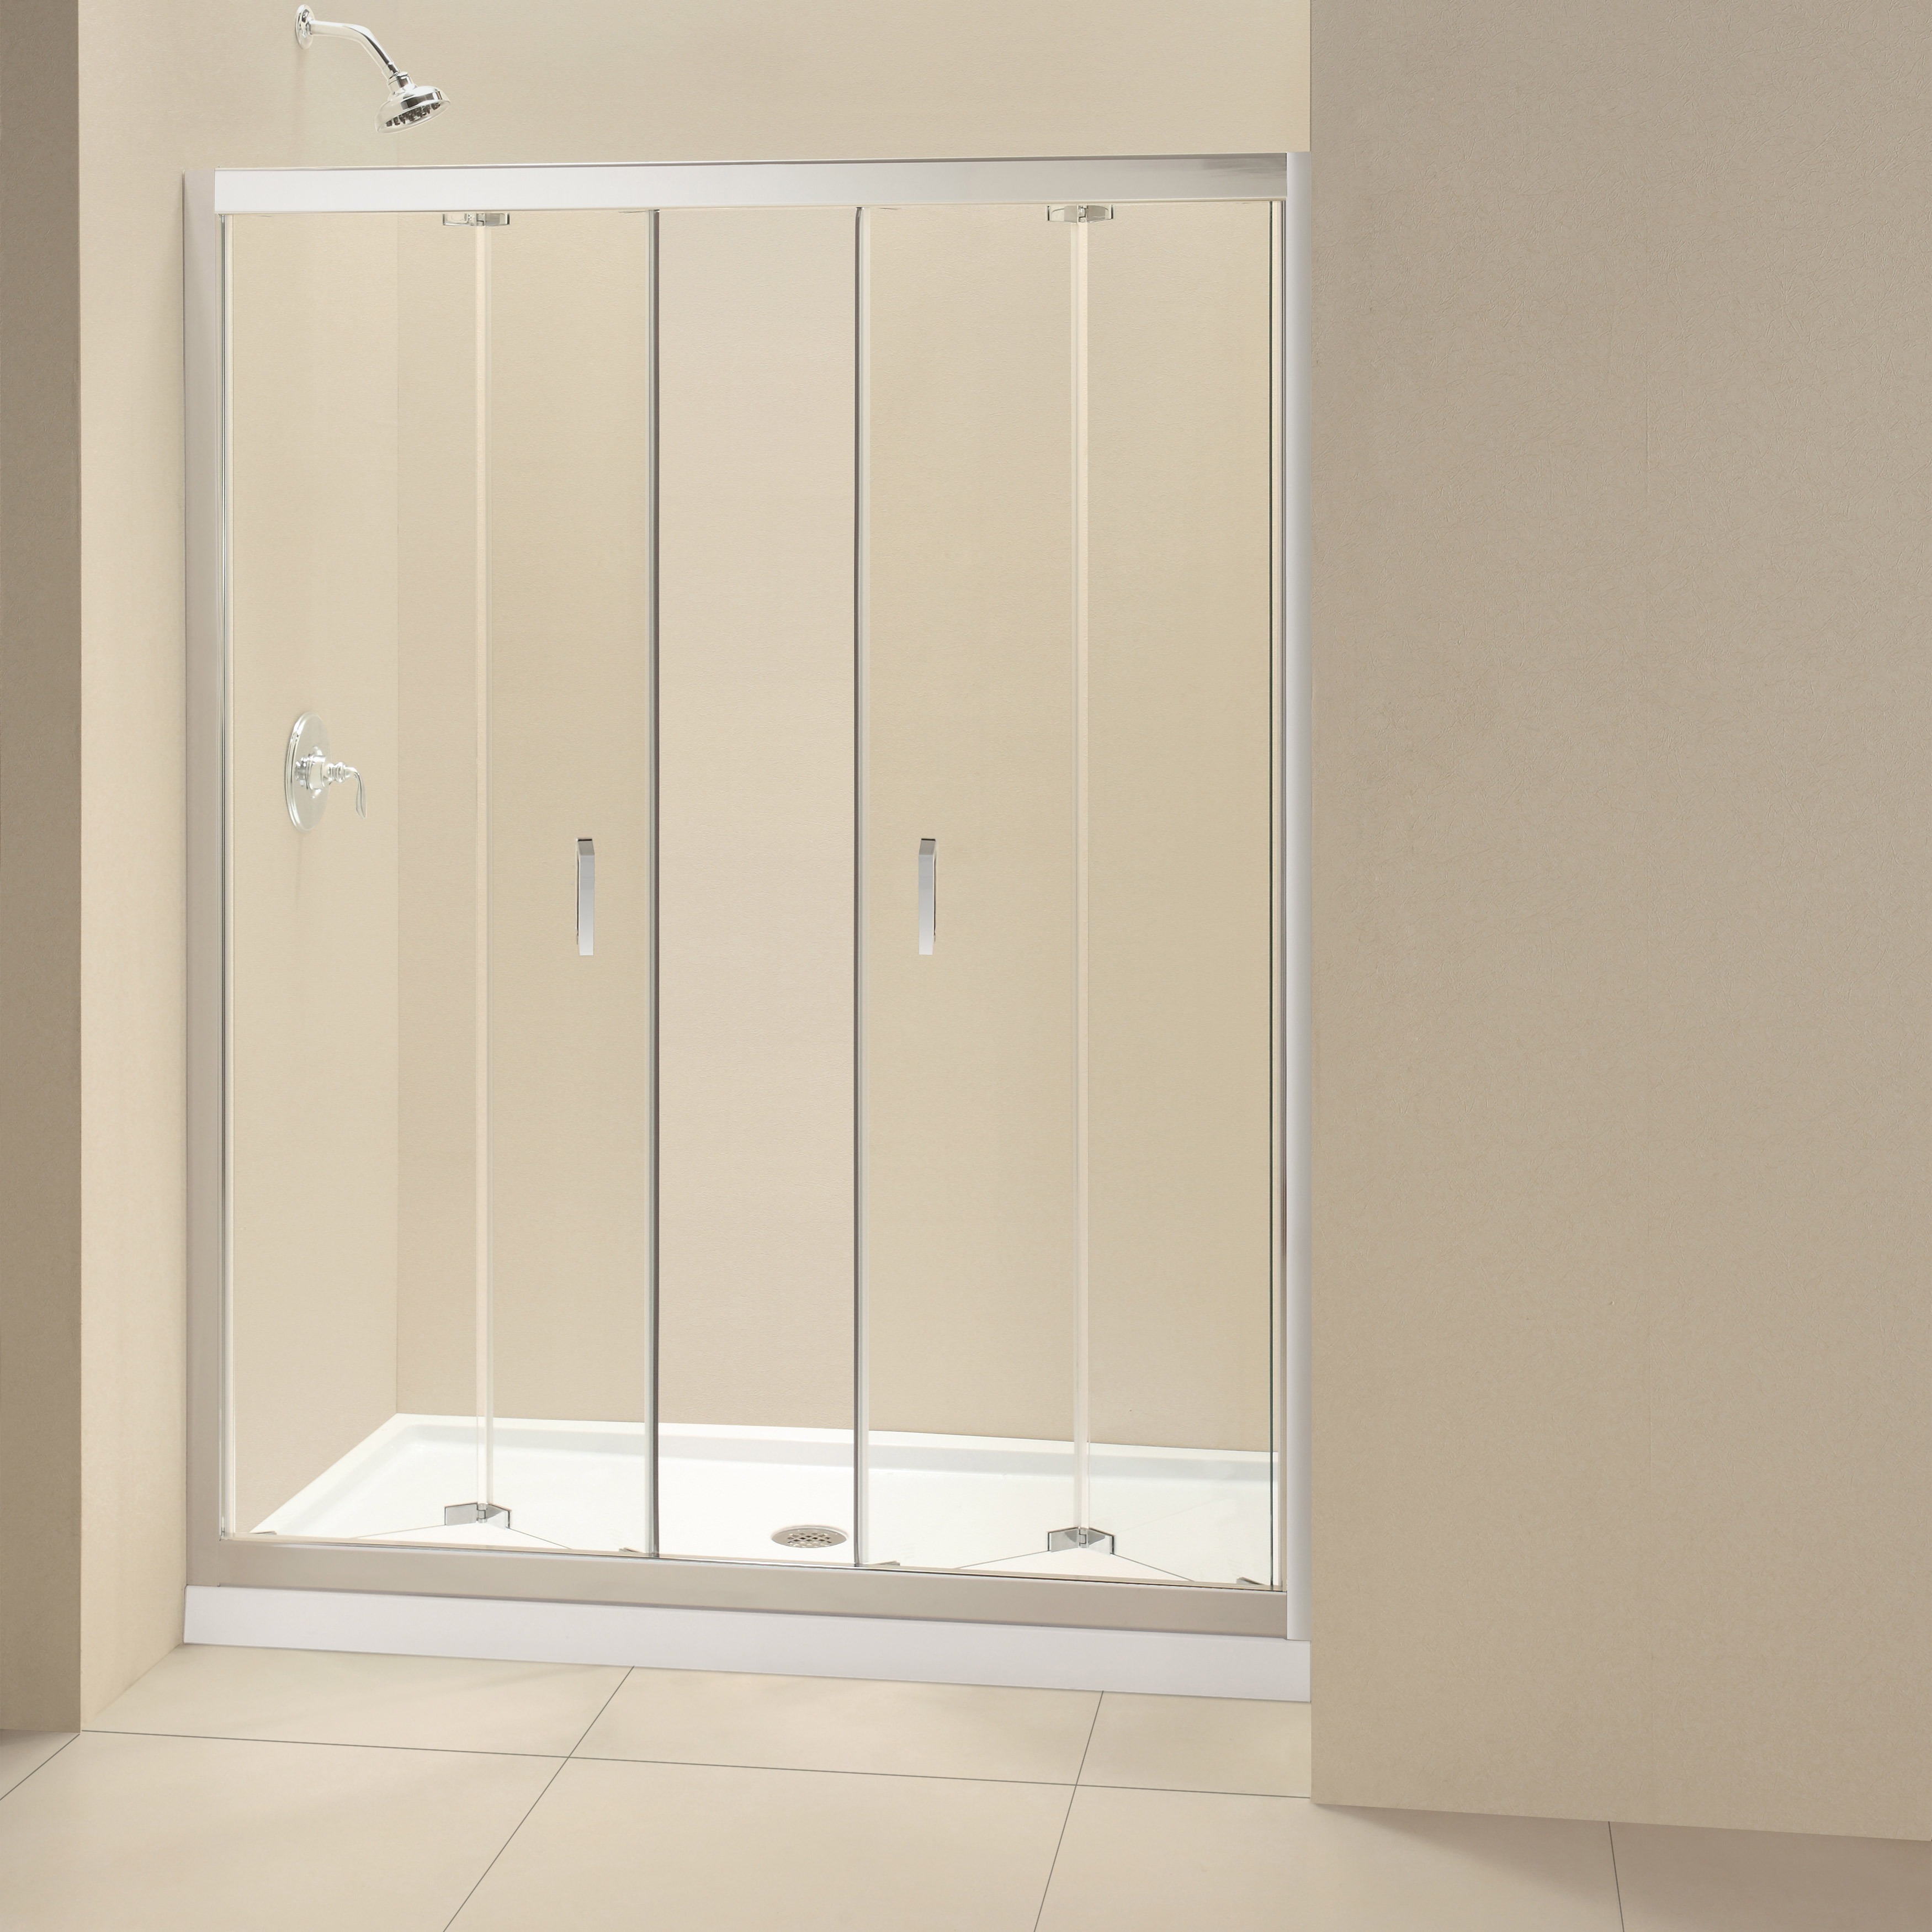 Dreamline Butterfly Bi fold Shower Door And 32x60 inch Shower Base